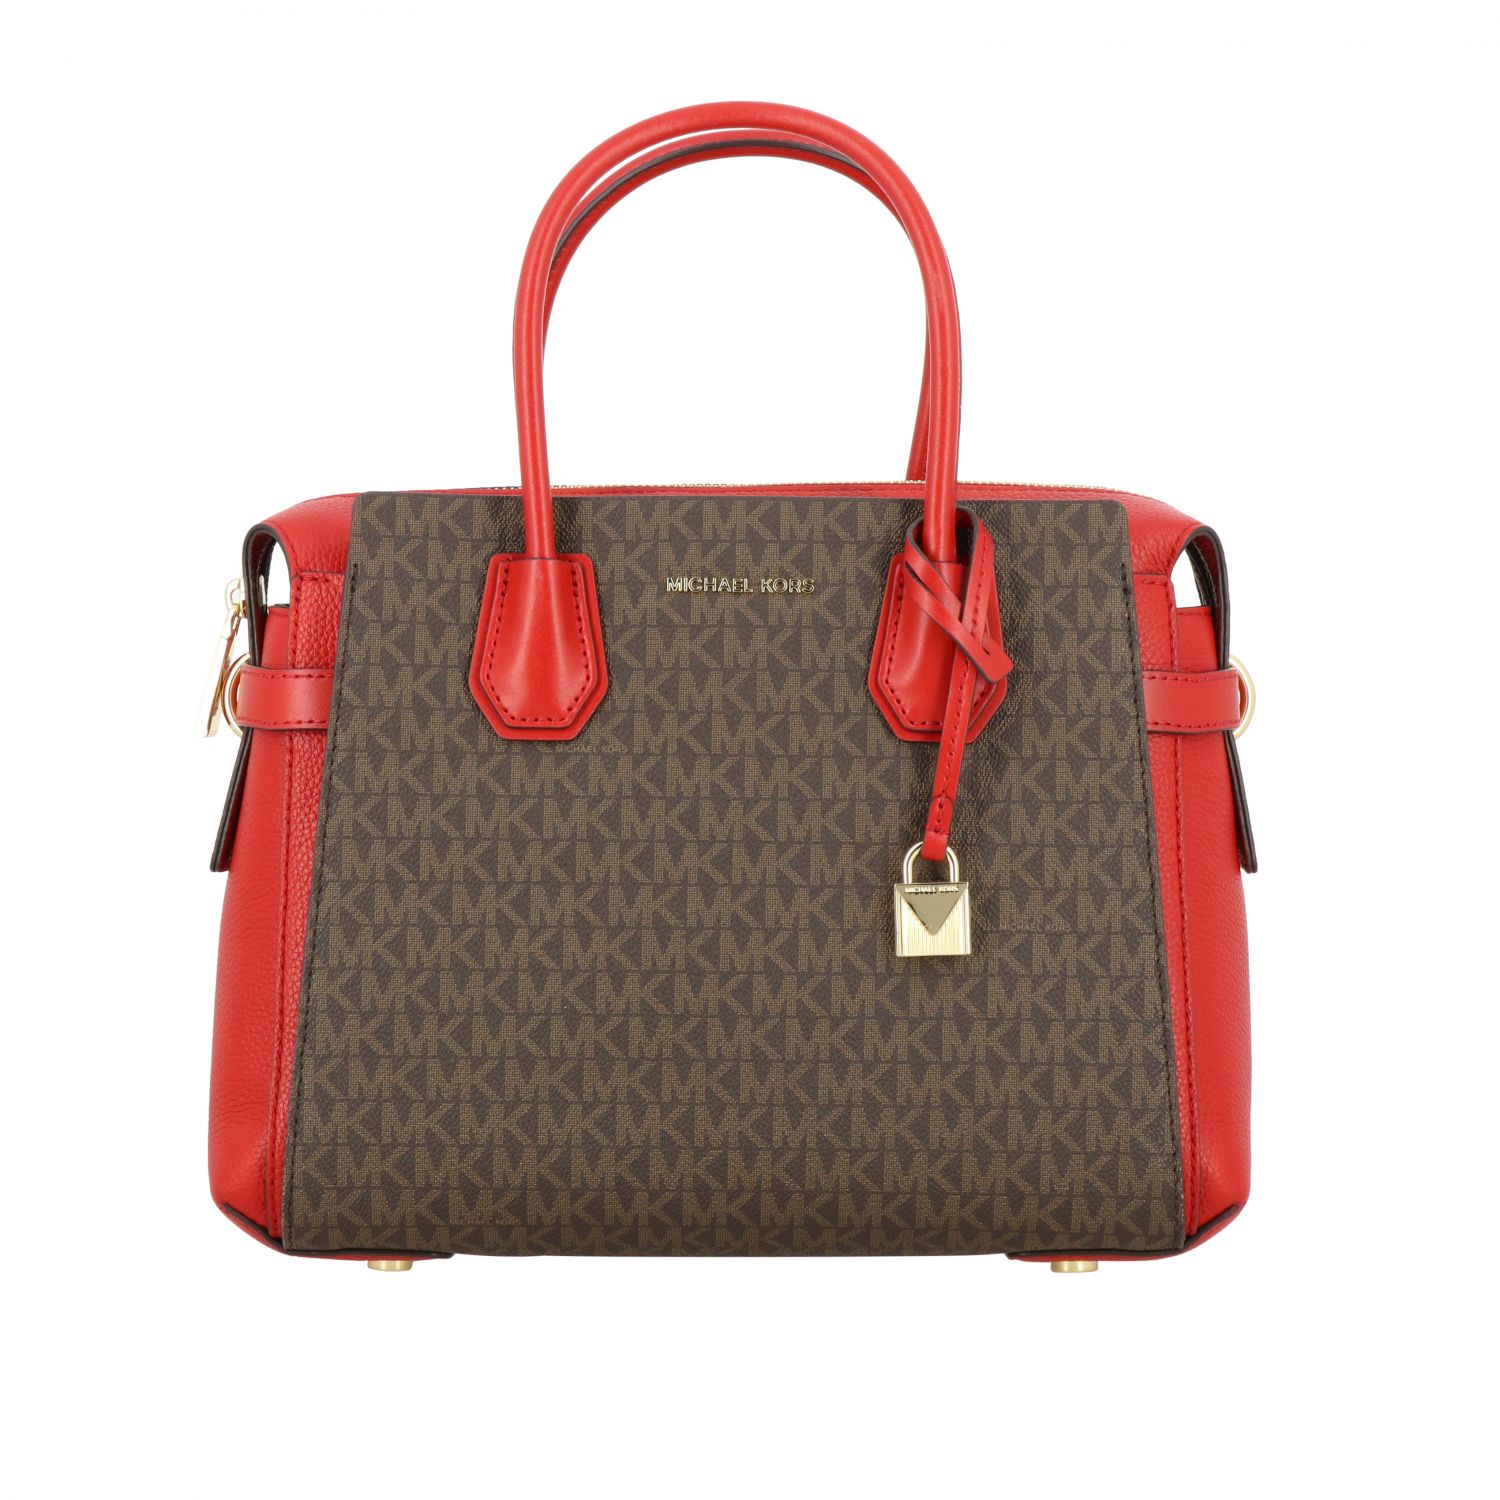 MICHAEL KORS: Mercer Michael bag with MK print - Red | Michael Kors handbag  30S9GM9S2B online on 